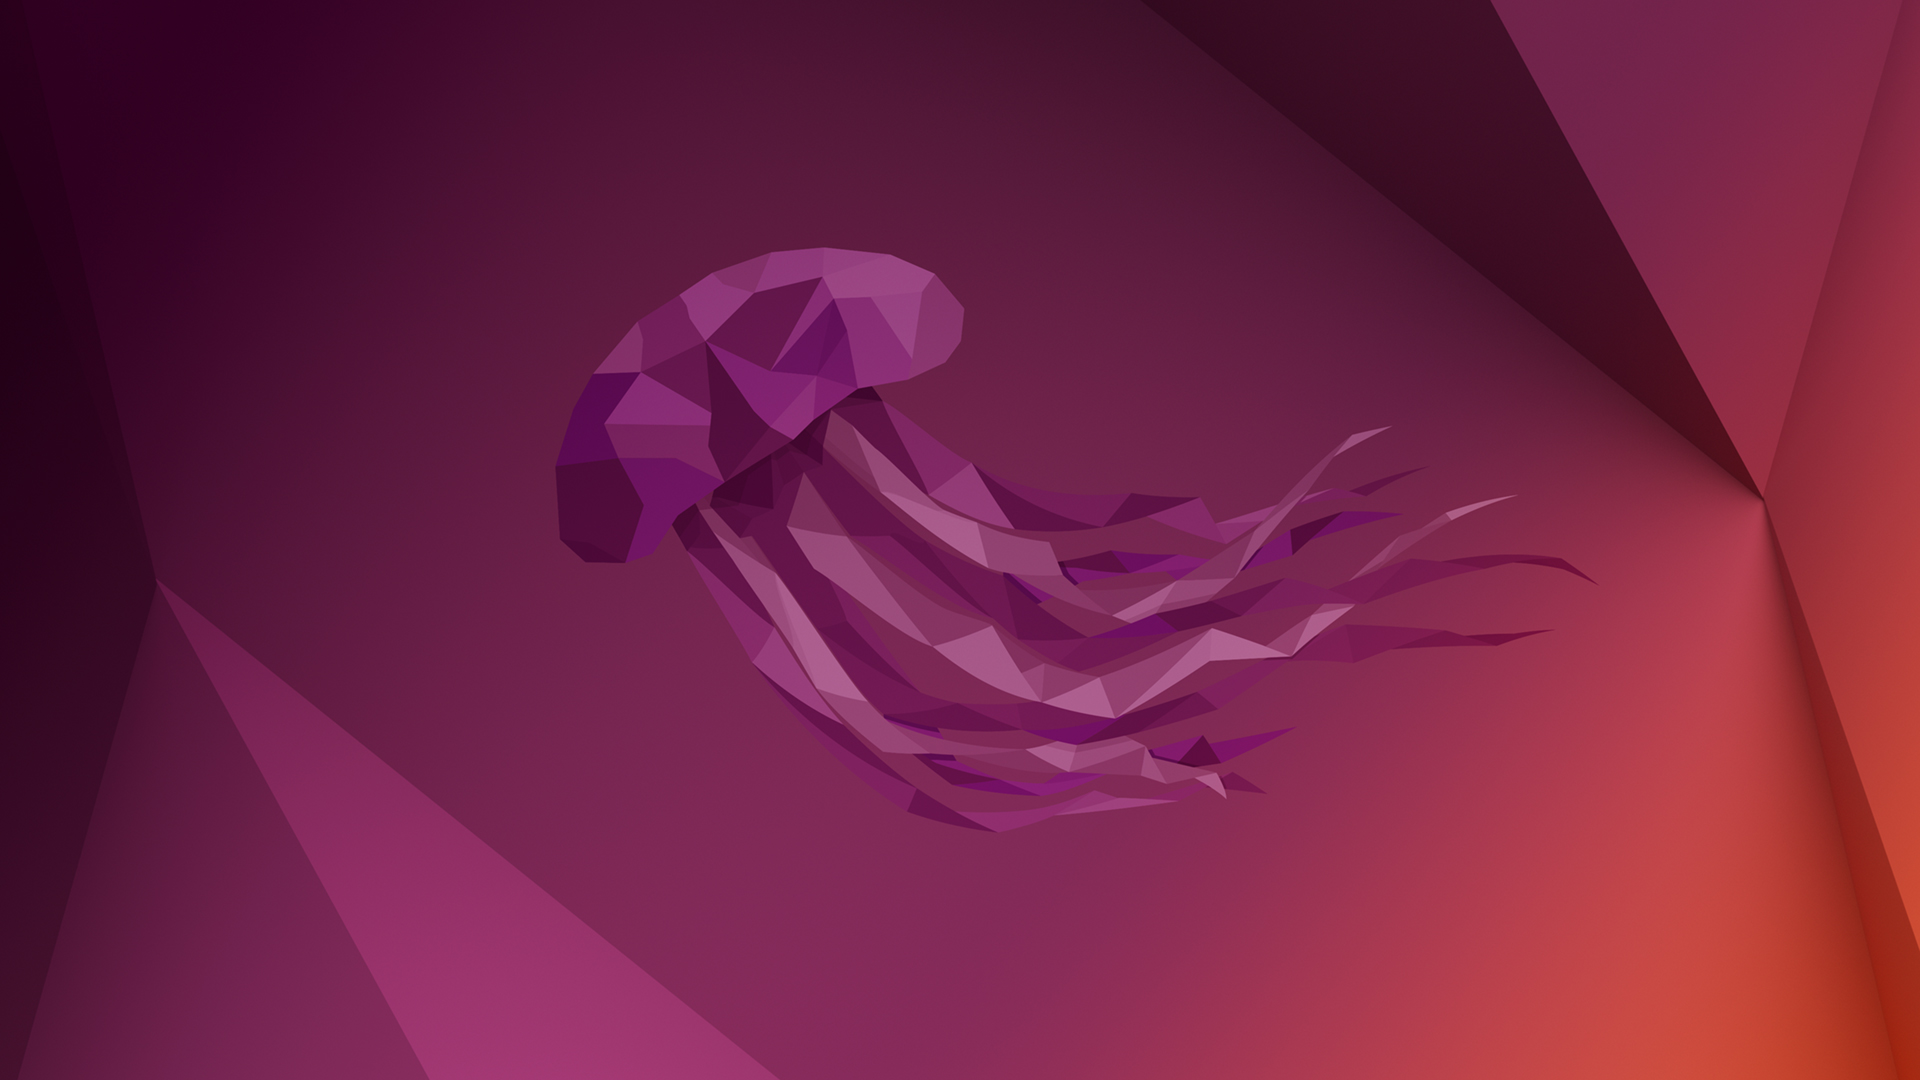 General 1920x1080 Ubuntu abstract colorful digital art simple background jellyfish minimalism animals gradient